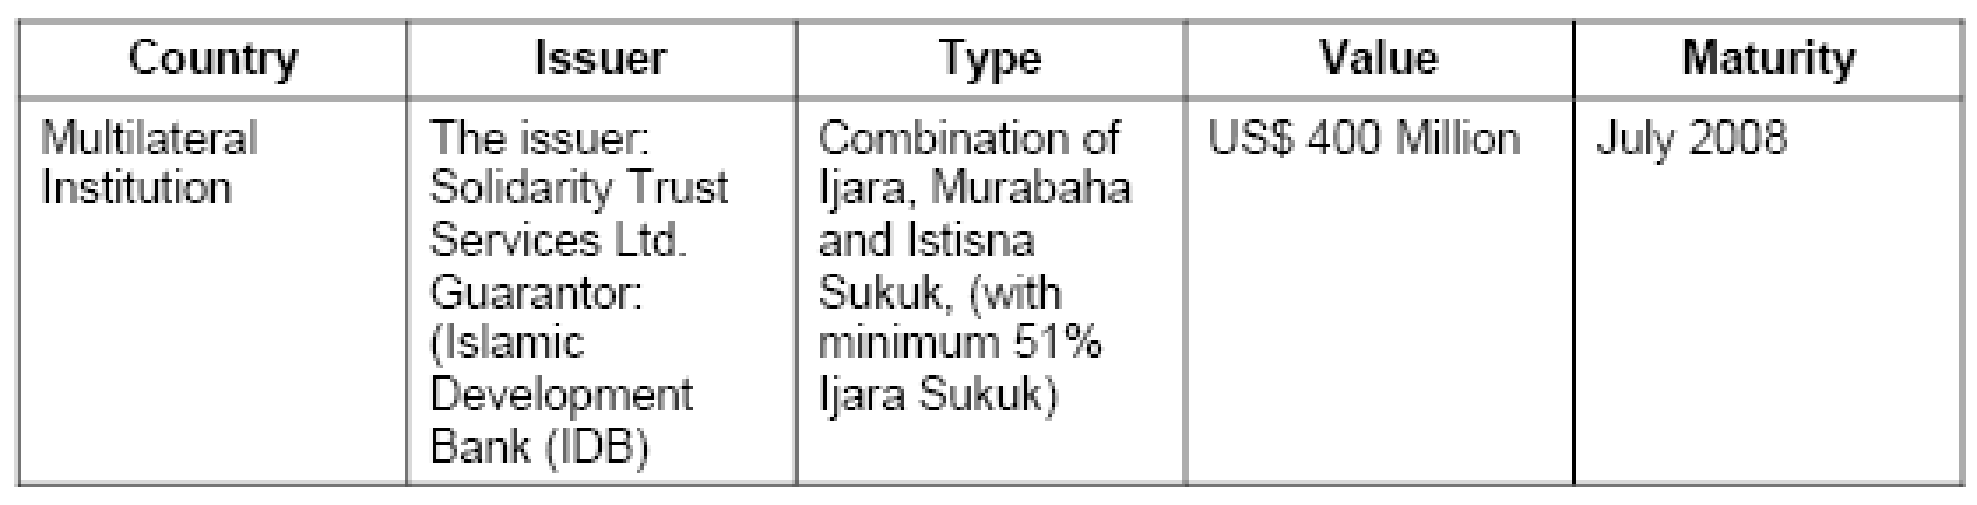 Hybrid Sukuk (combination of Istisna and Ijarah). Source: - Kettell (2008, p.6)